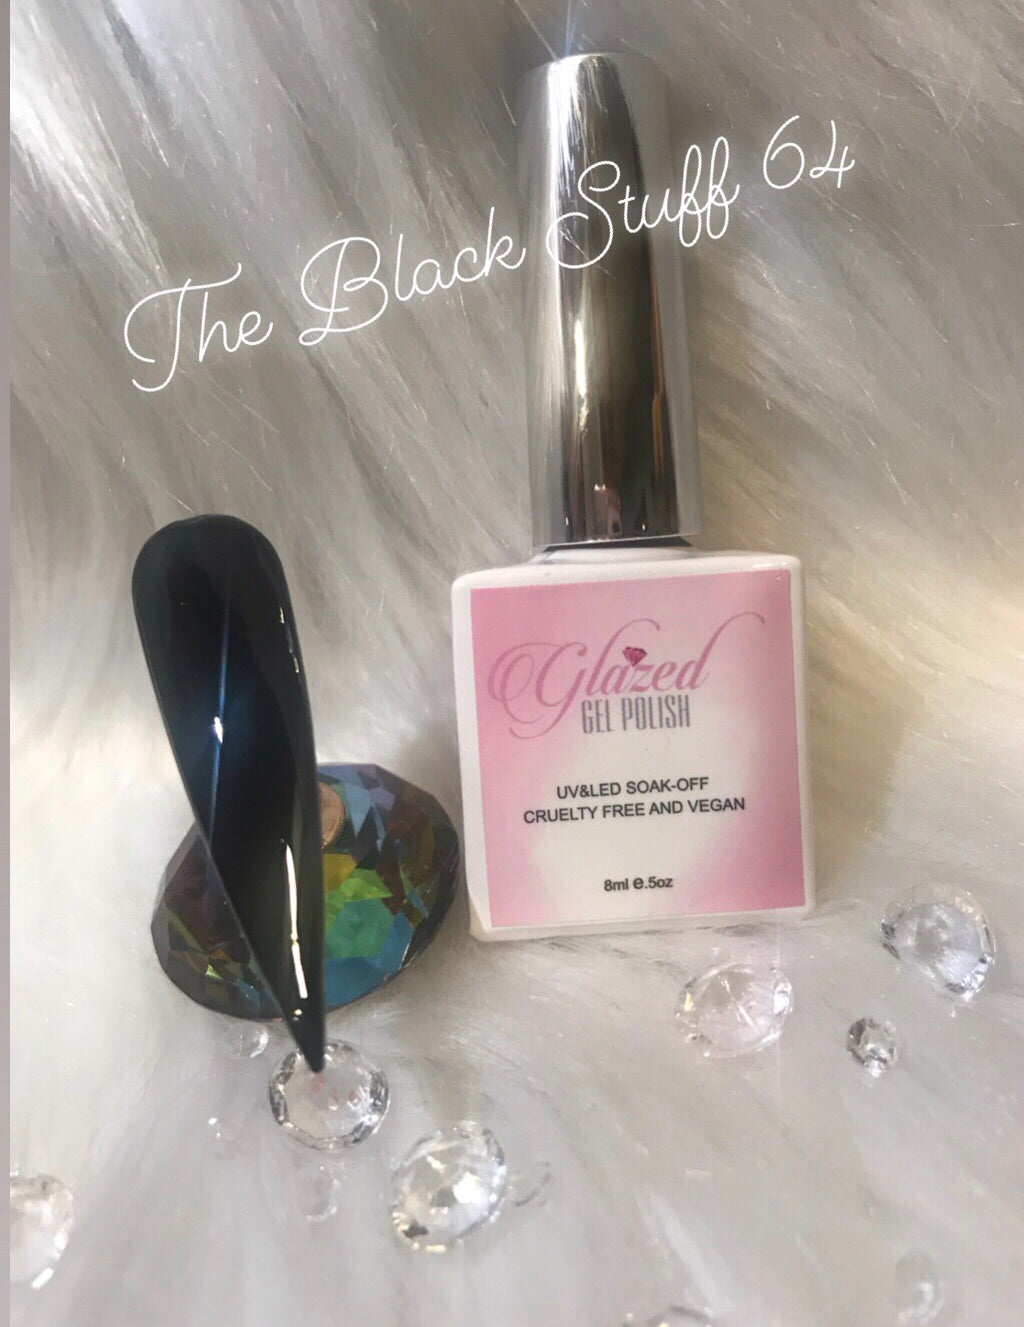 The Black Stuff Glazed Gel Polish 64